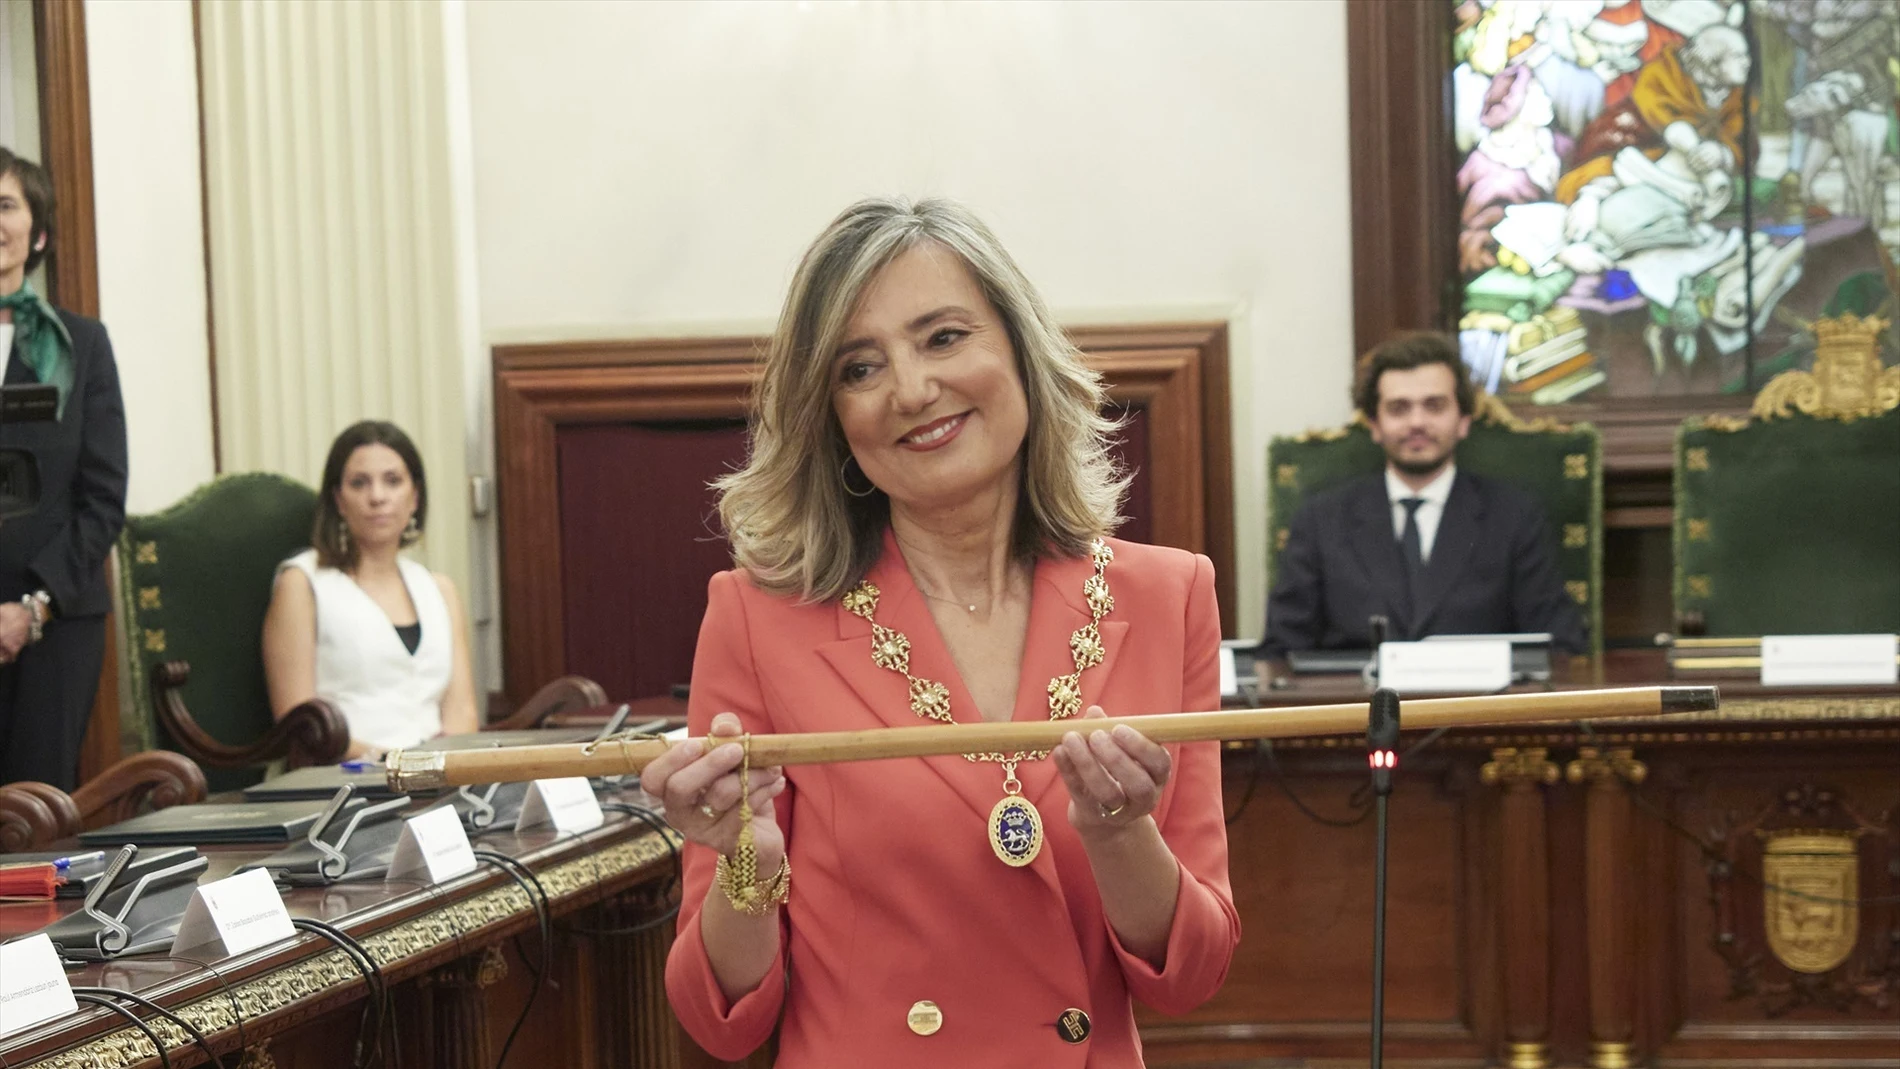 Cristina Ibarrola en su toma de posesión como alcaldesa de Pamplona